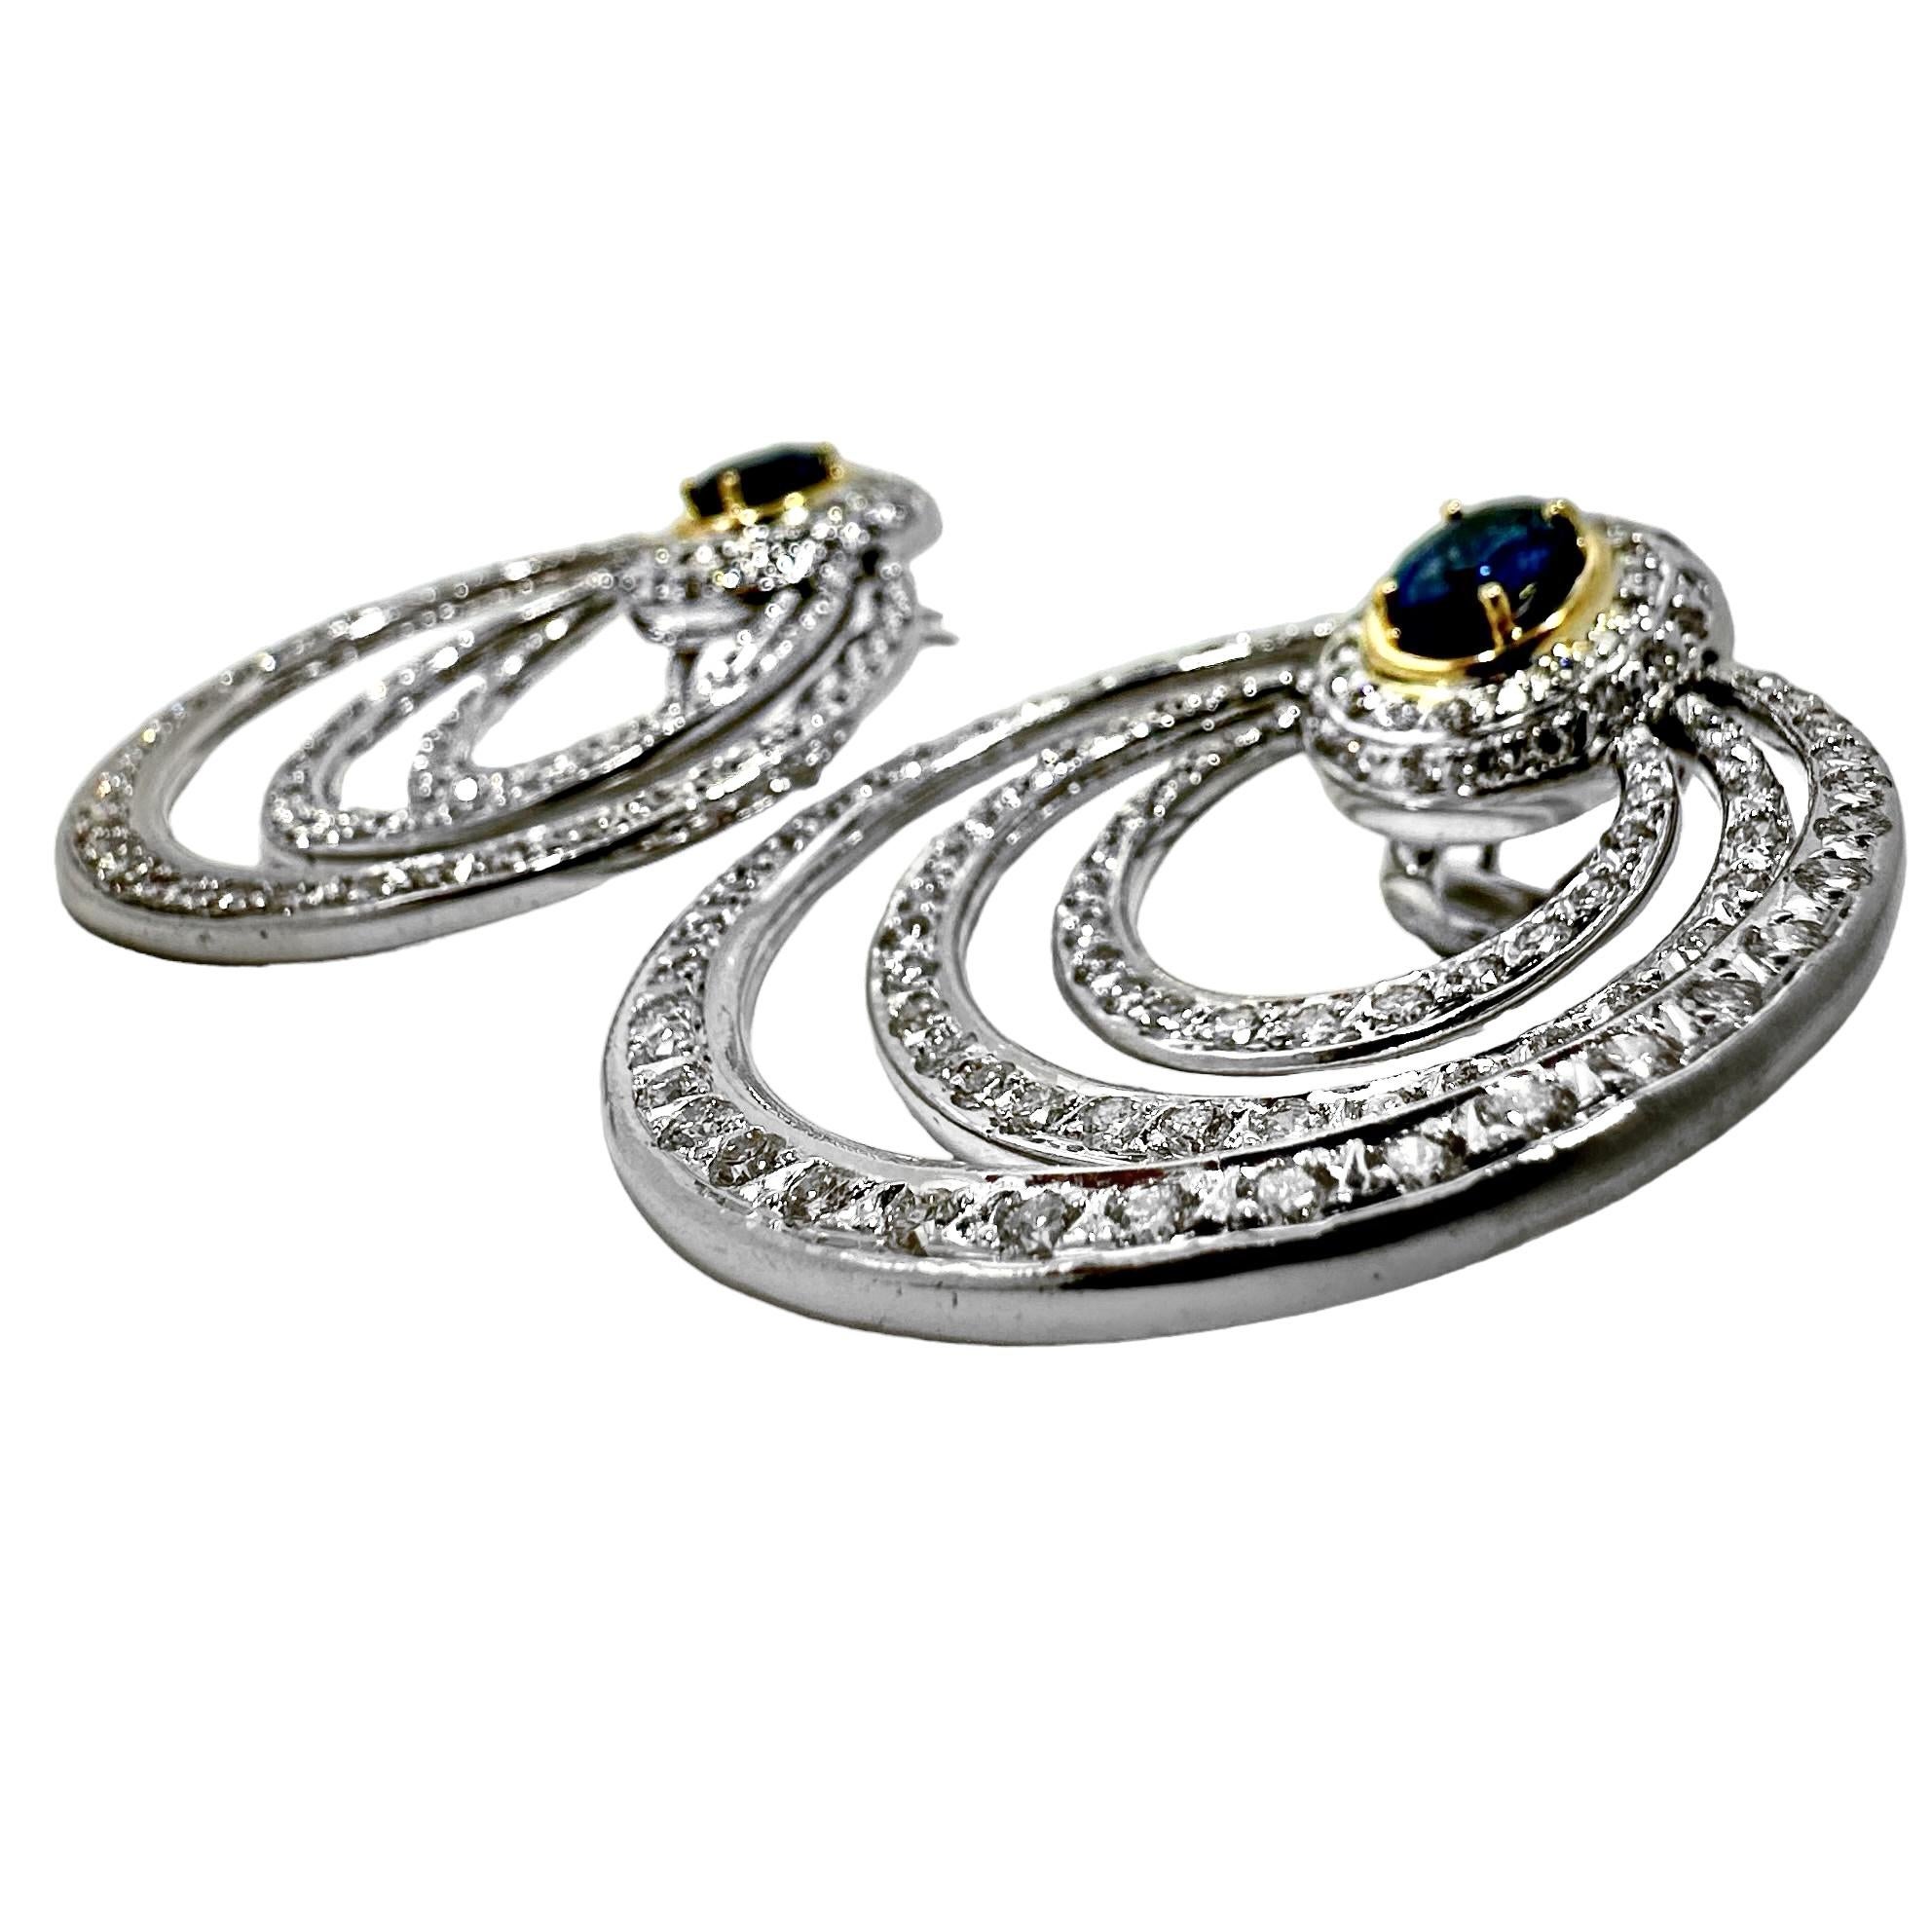 Brilliant Cut Dramatic 18k White & Yellow gold, Diamond & Sapphire Hoop Earrings by Repossi